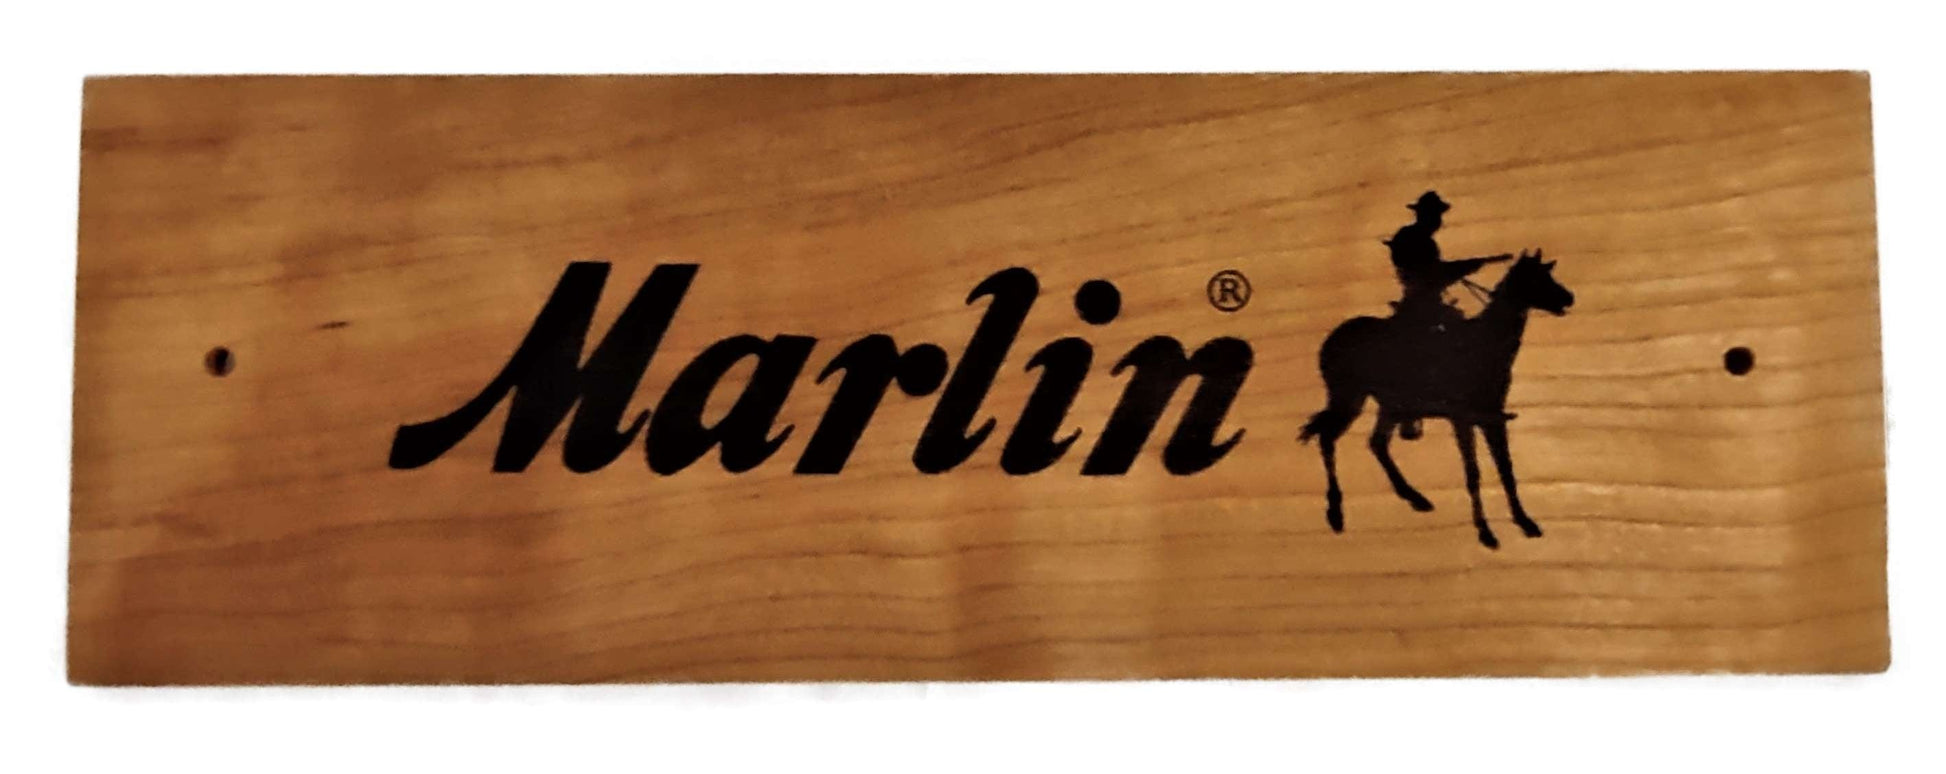 Walker Wood Gifts Novelties Rustic Cherry Marlin Gun Plaque, Laser Burned, Ranch Cowboy Decor Gift